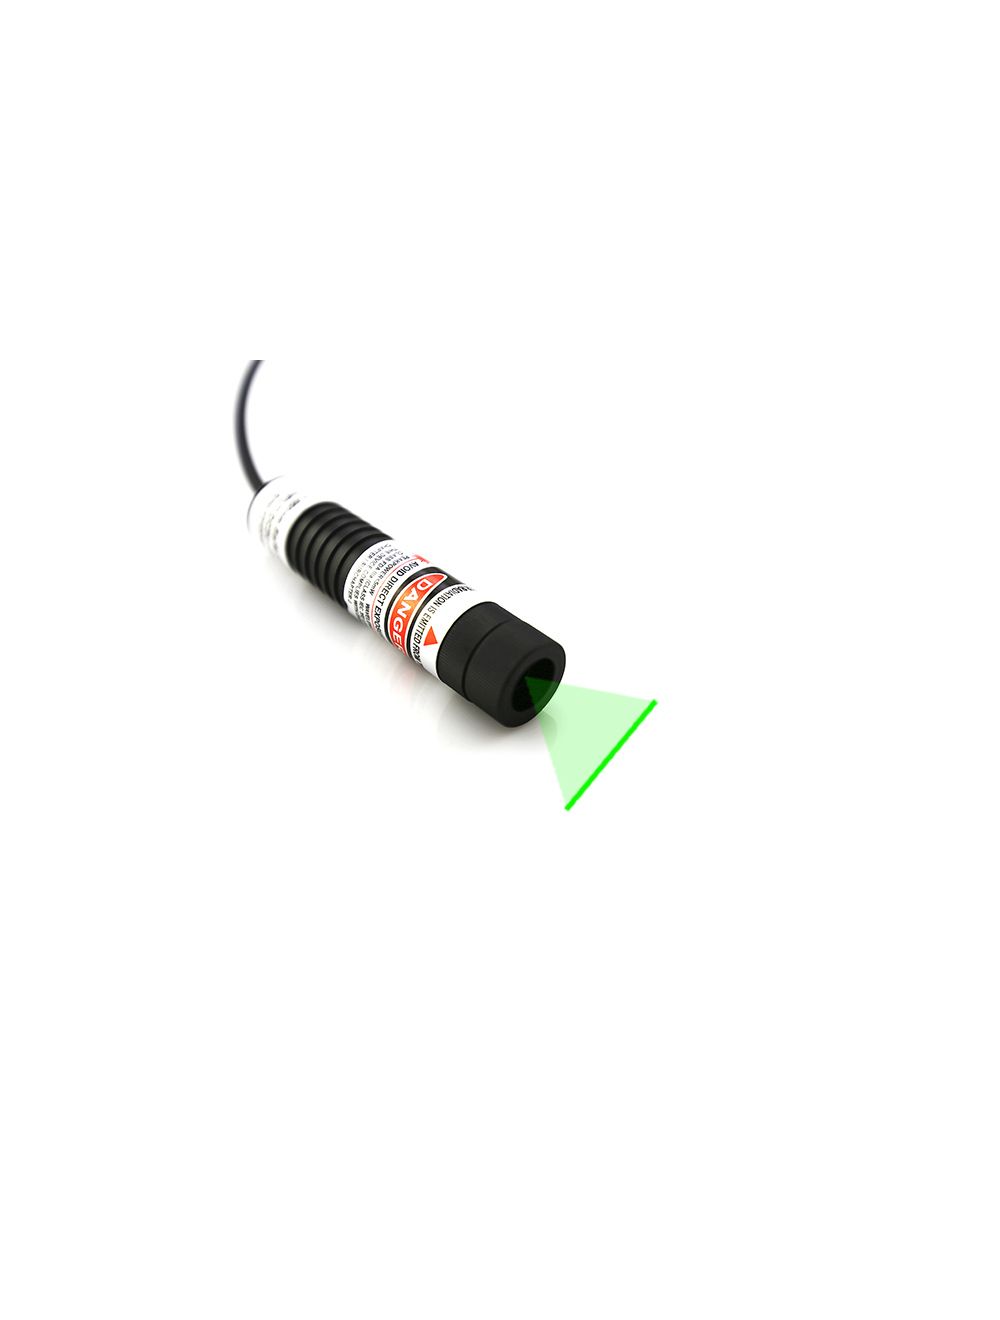 Focusable 515nm Green Laser Line Generator, Green Laser Diode Module, Line Laser  Modules